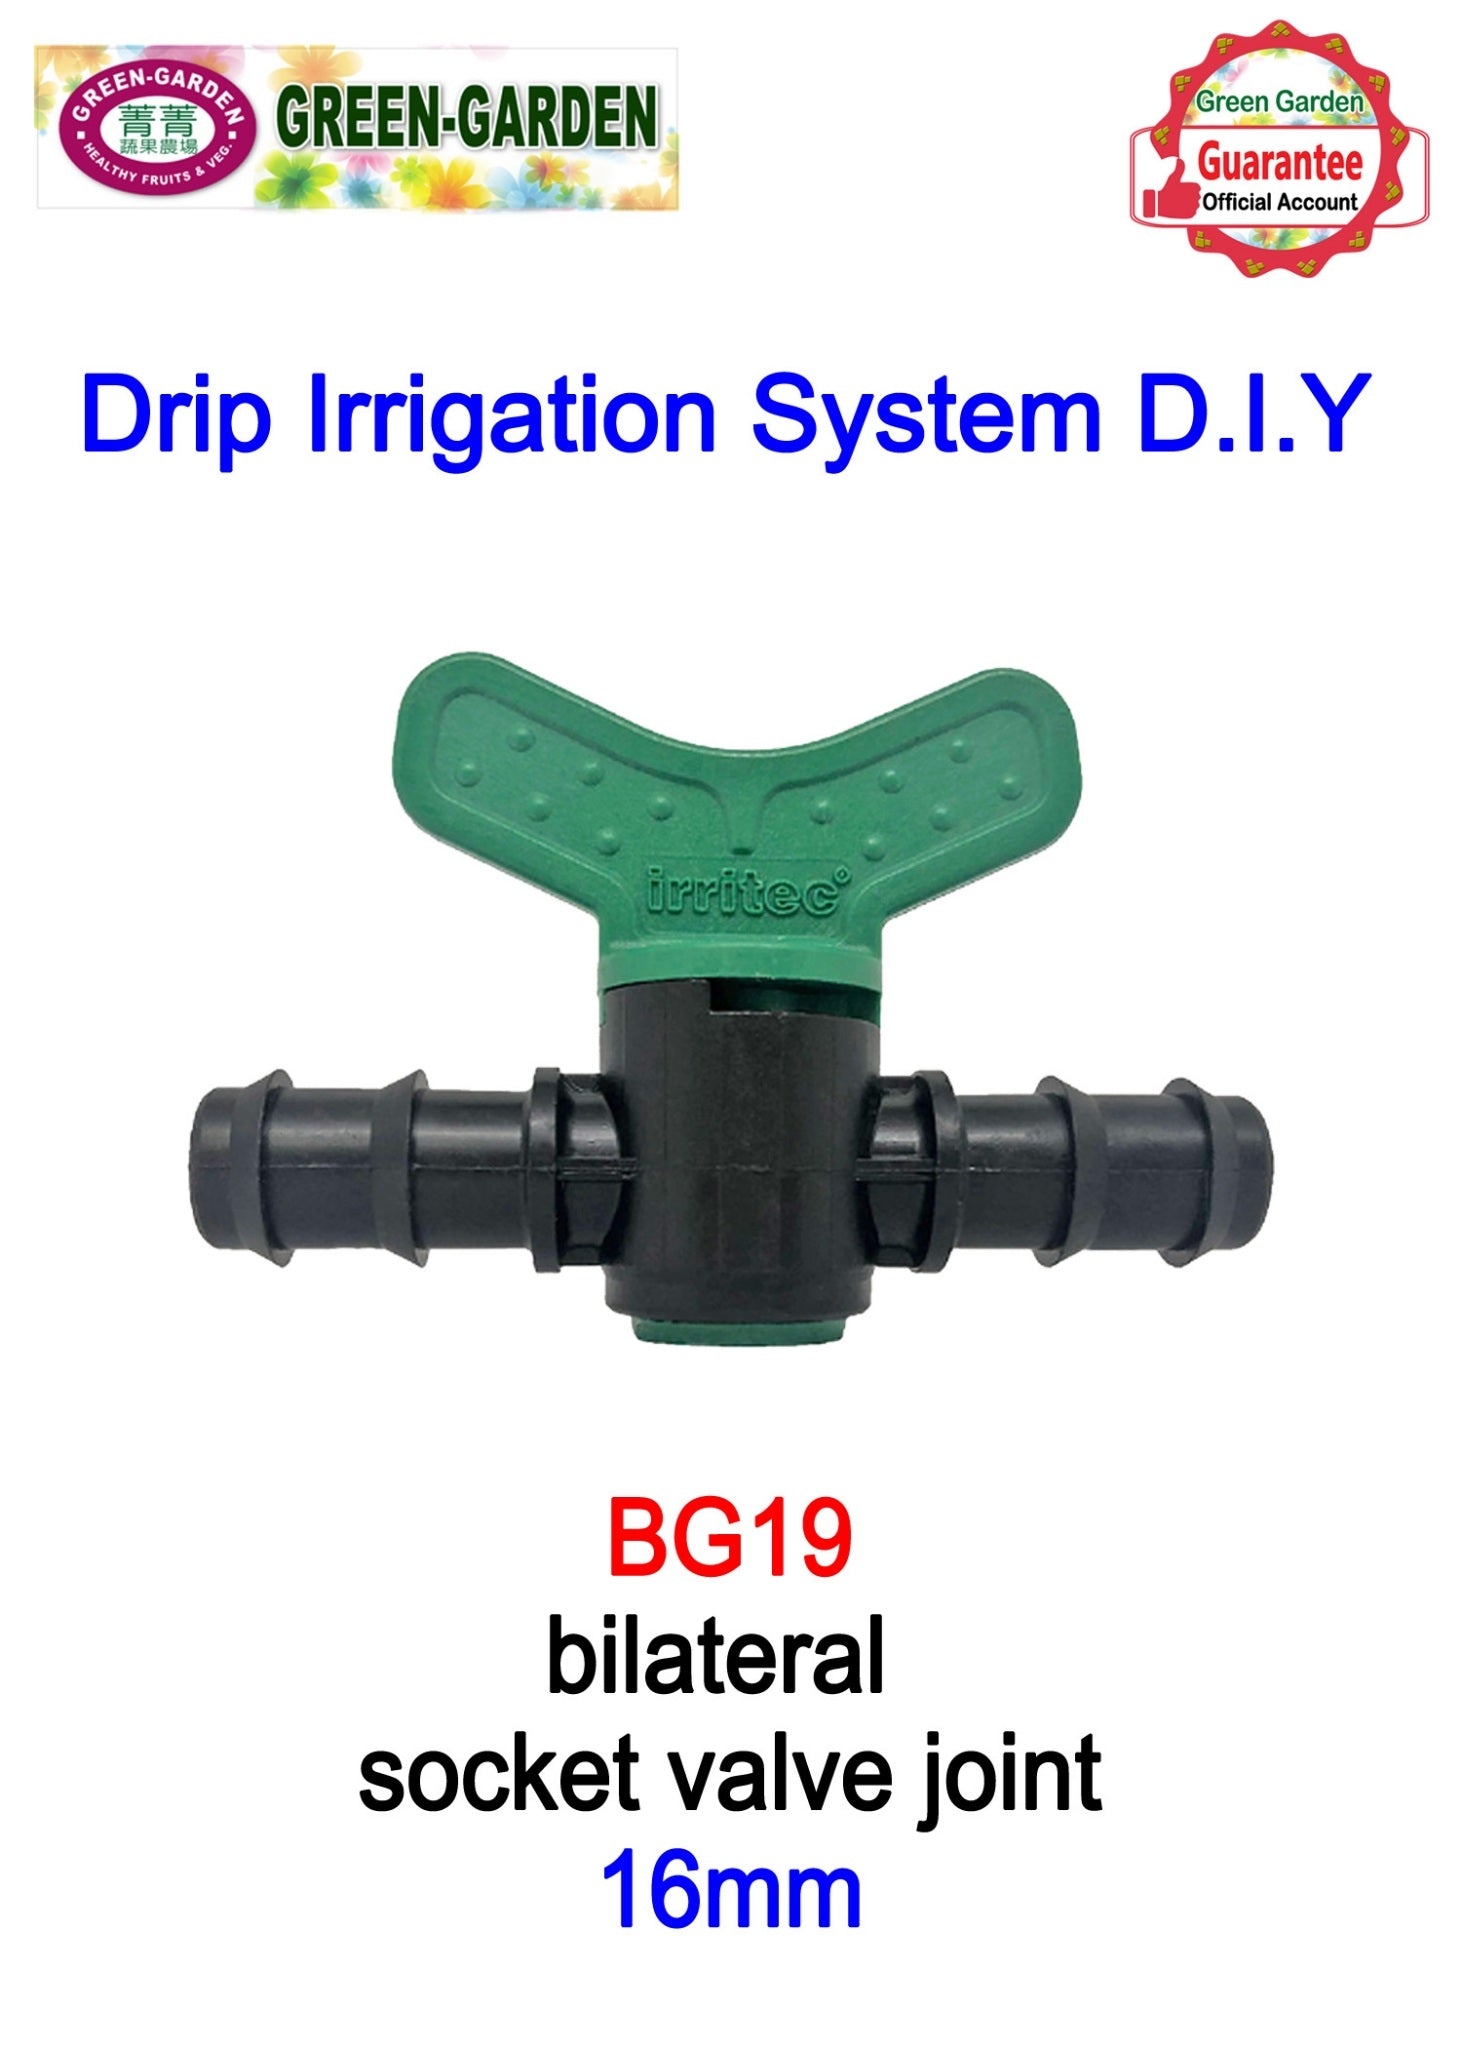 Drip Irrigation System - 16mm bilateral socket valve joint BG19